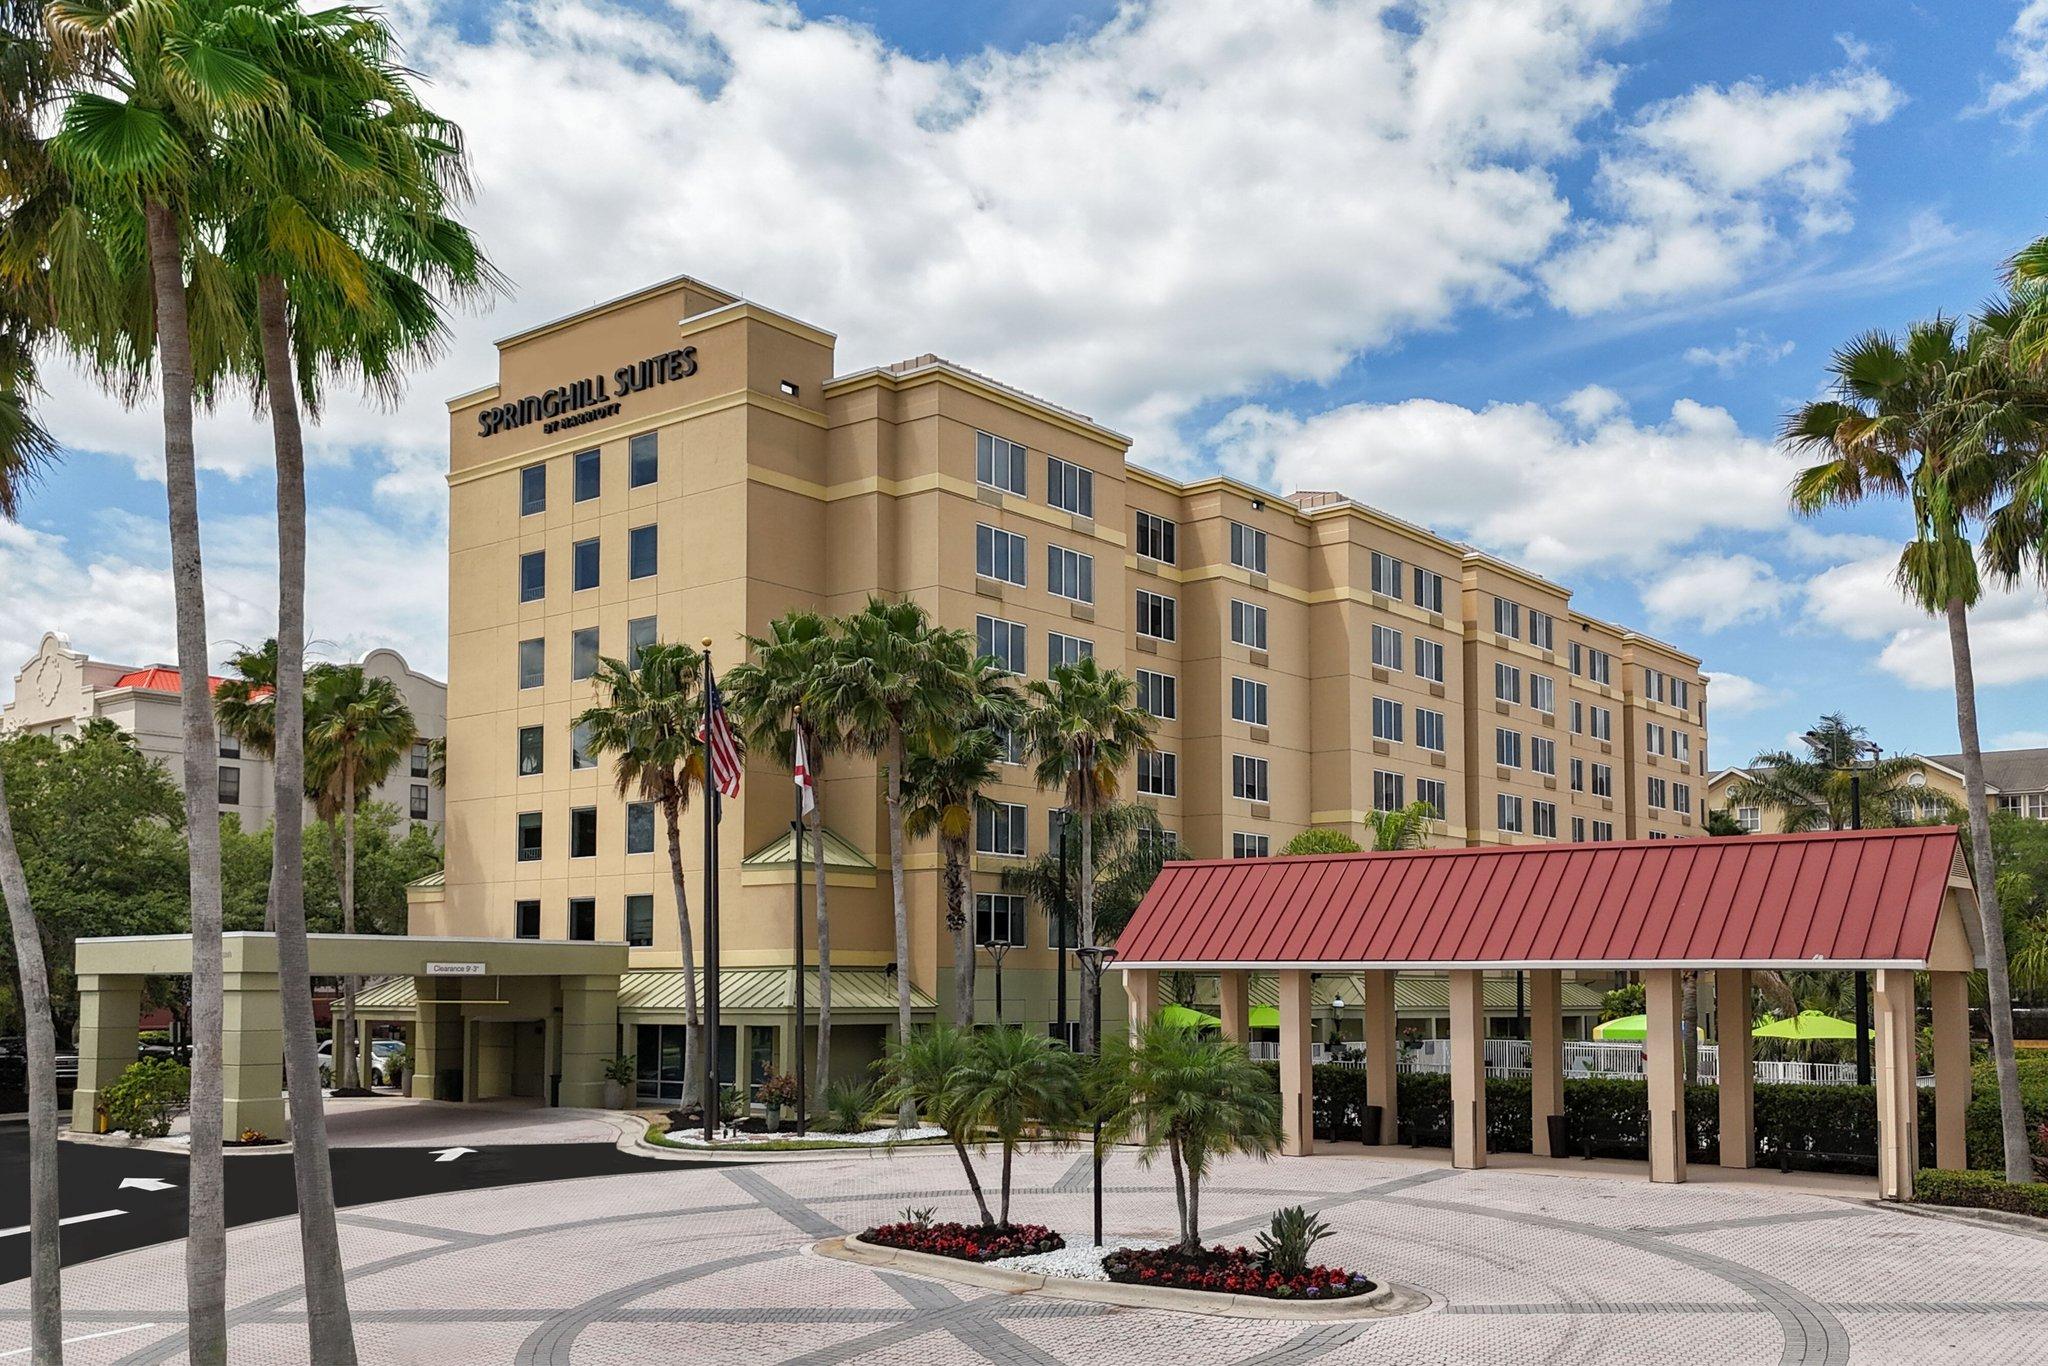 SpringHill Suites Orlando Convention Center/International Drive Area in Orlando, FL